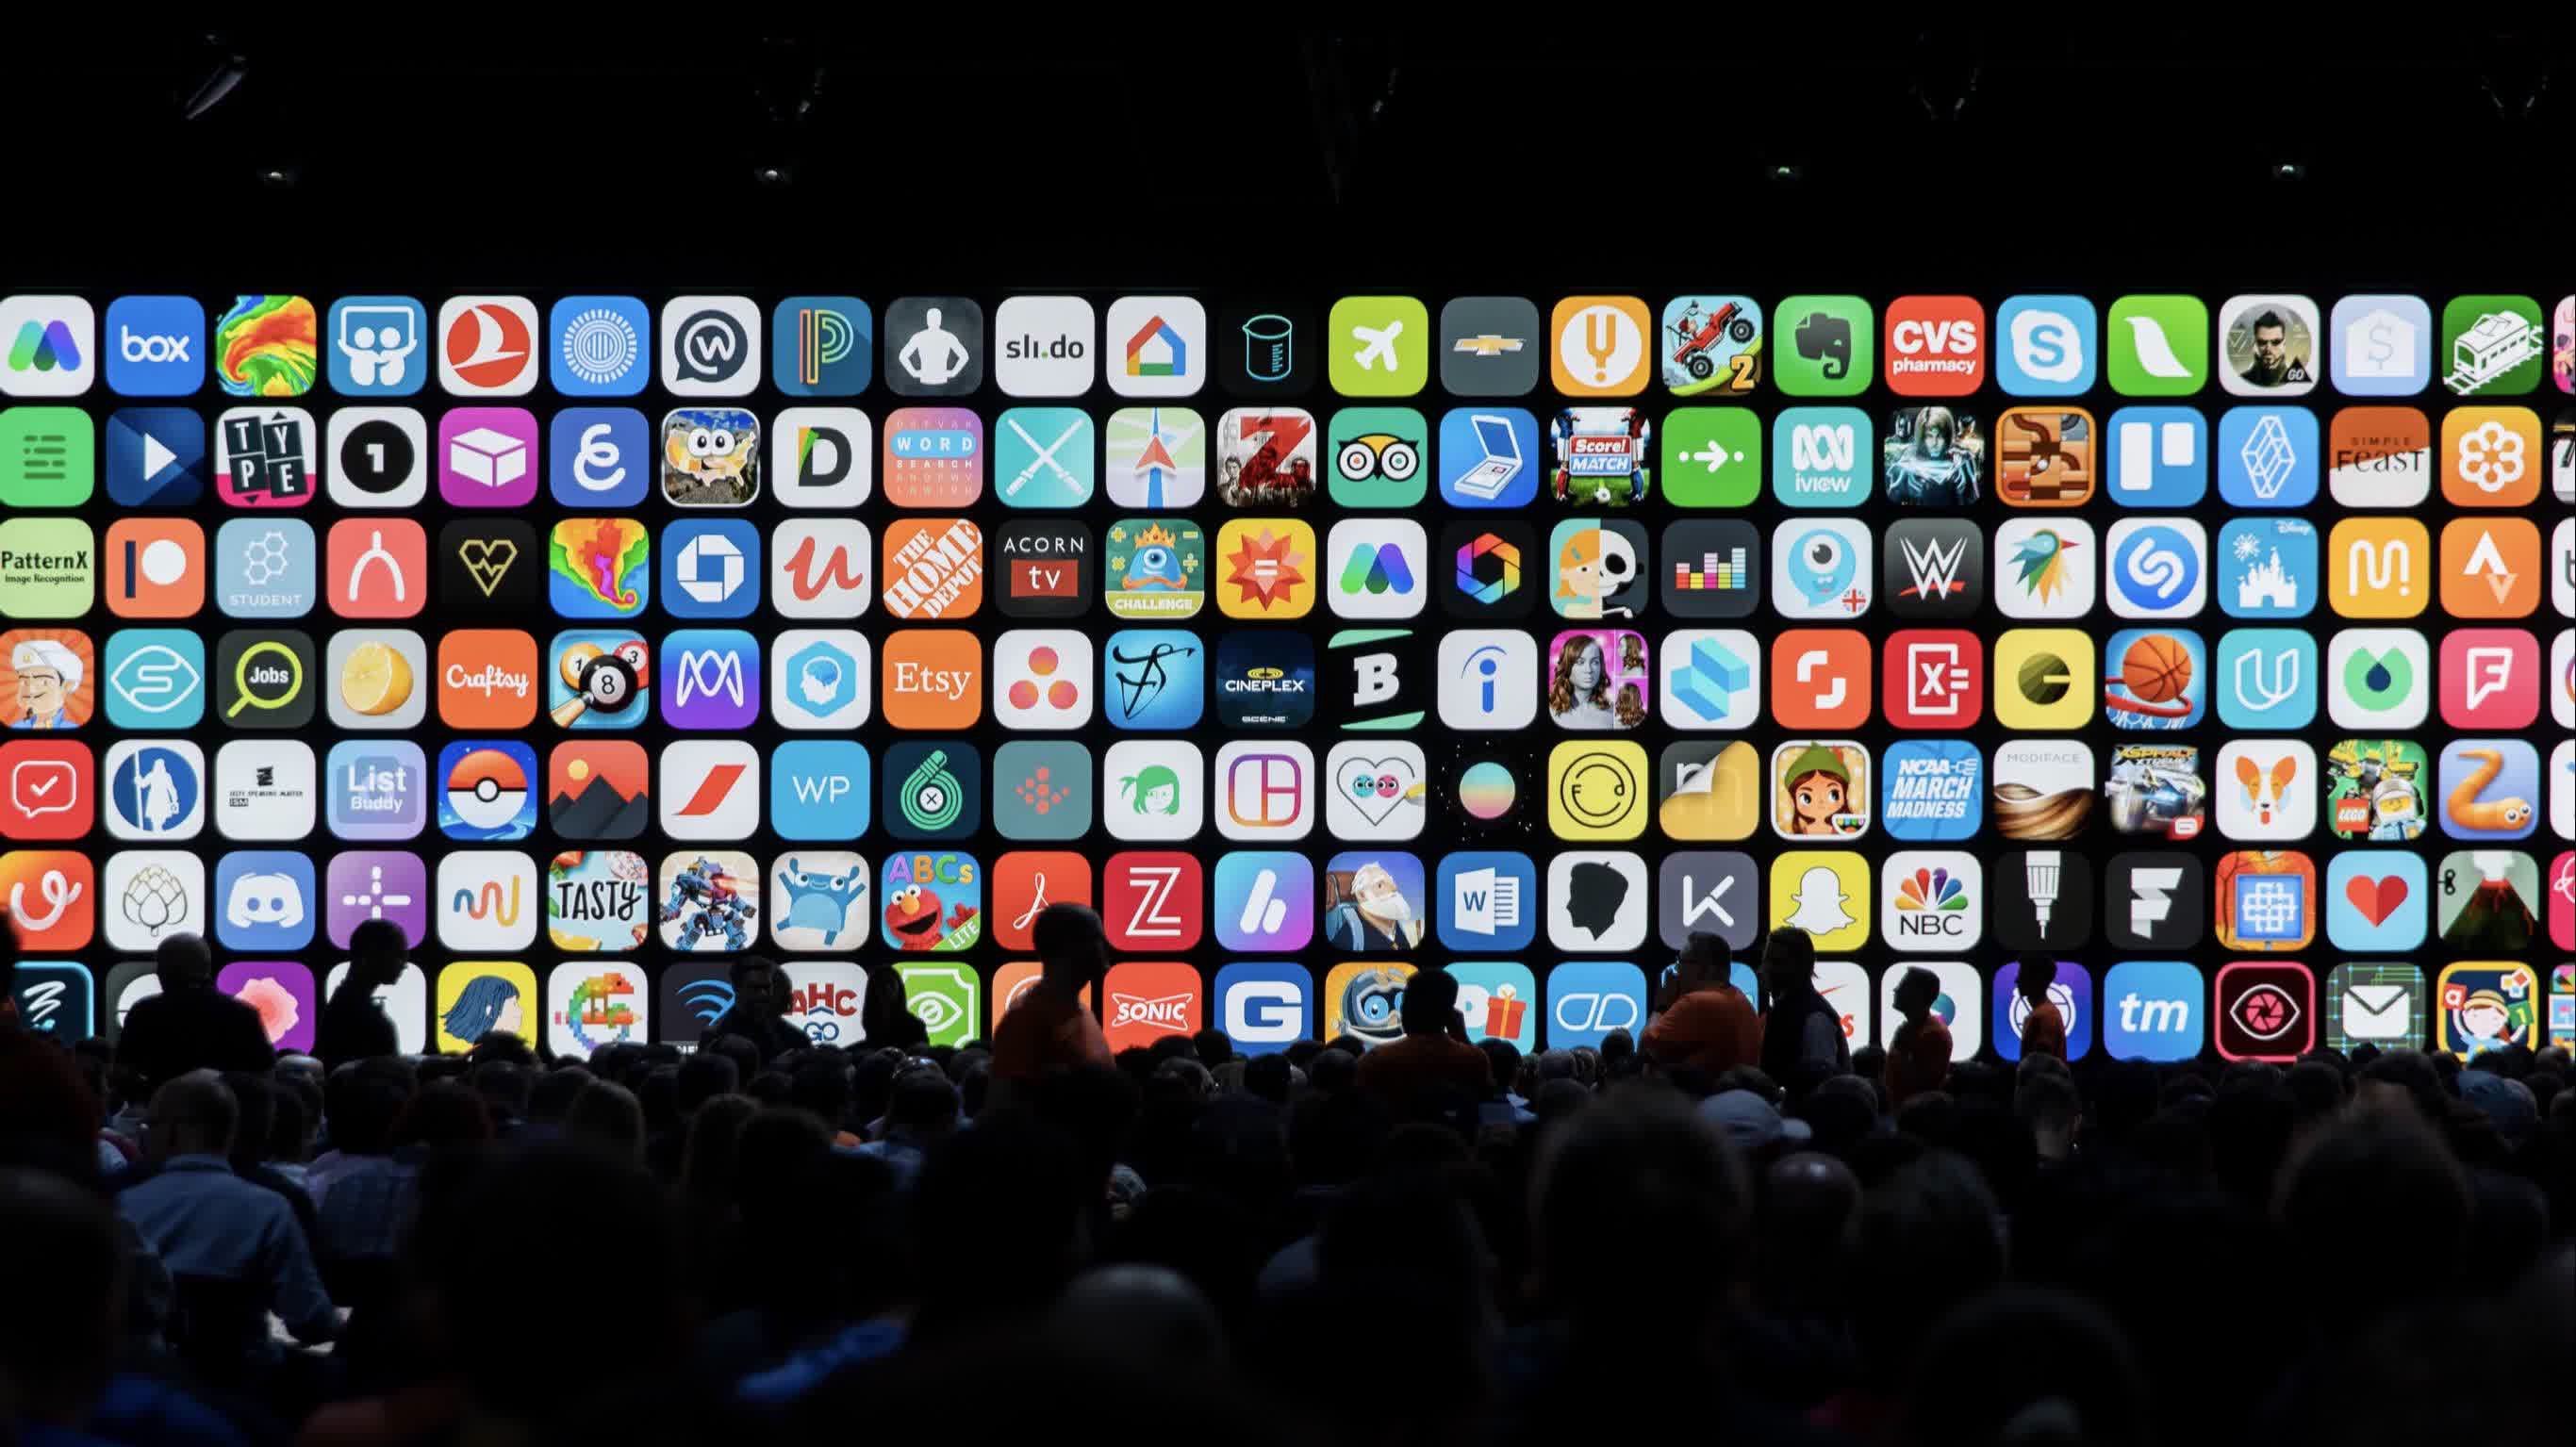 Apple: App Store ecosystem generated $643 billion in sales last year alone